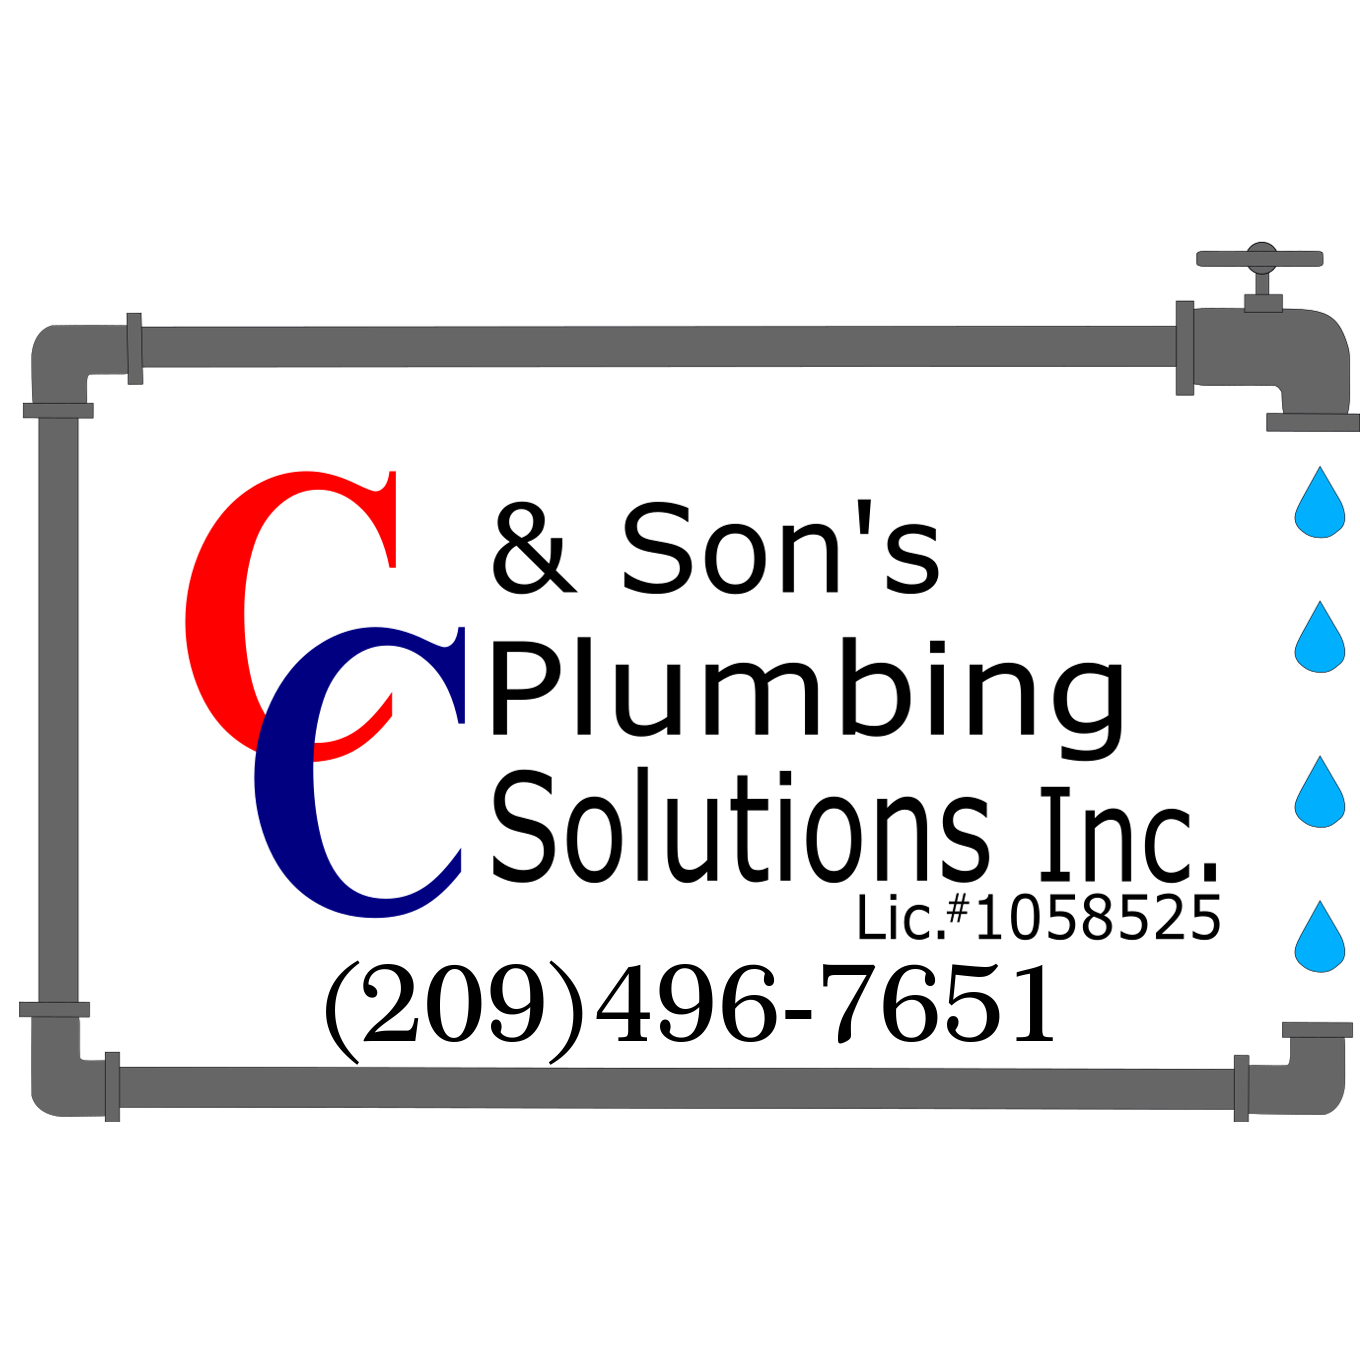 C.C & Son's Plumbing Solutions - Turlock, CA 95382 - (209)496-7651 | ShowMeLocal.com